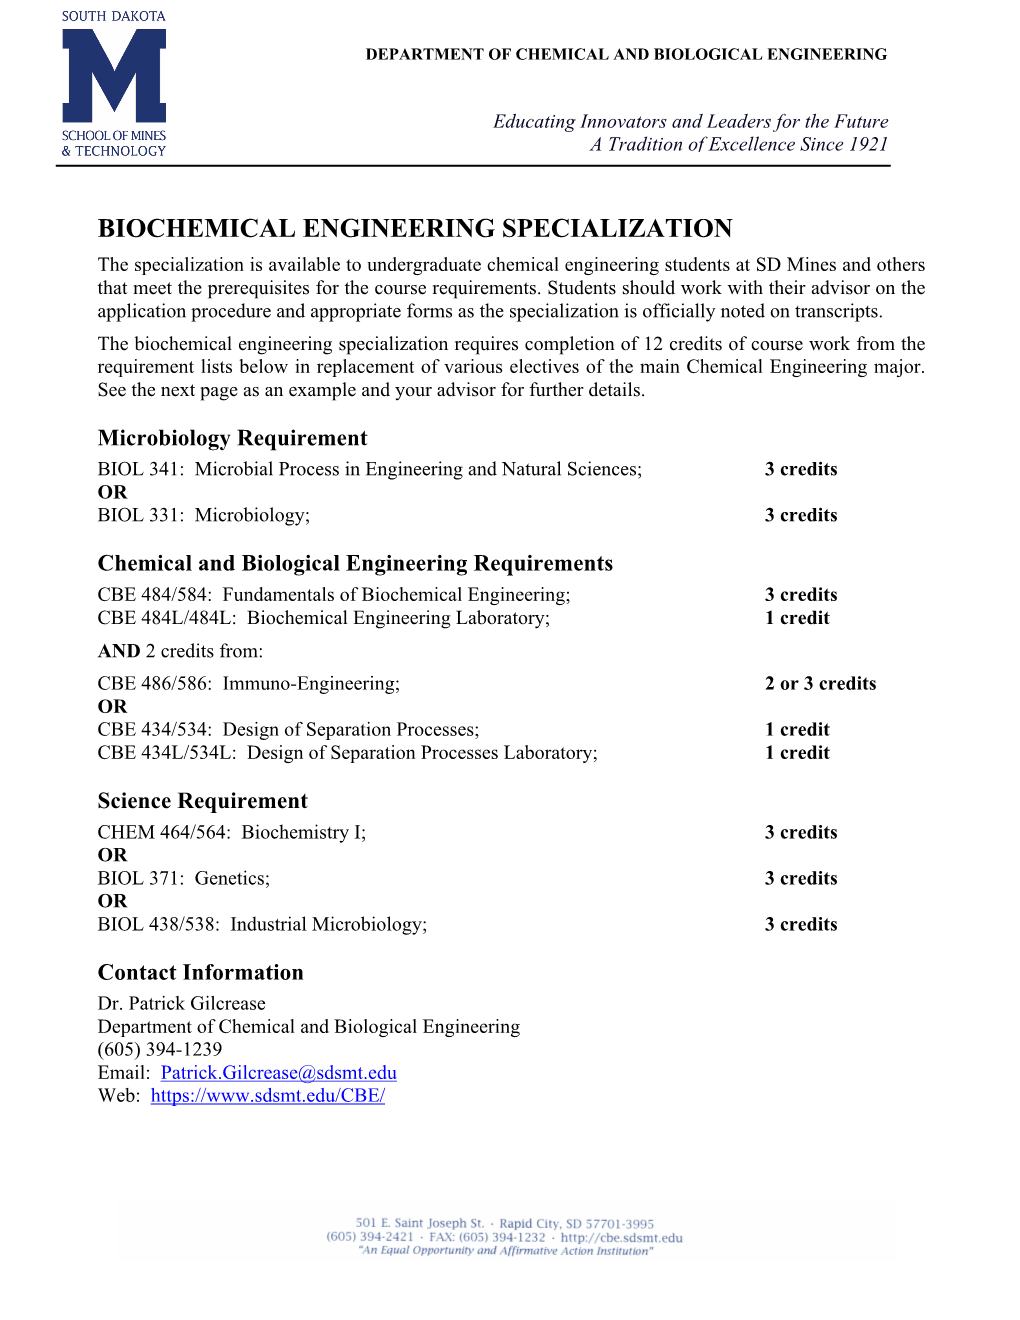 Biochemical Engineering Specialization (Bp)